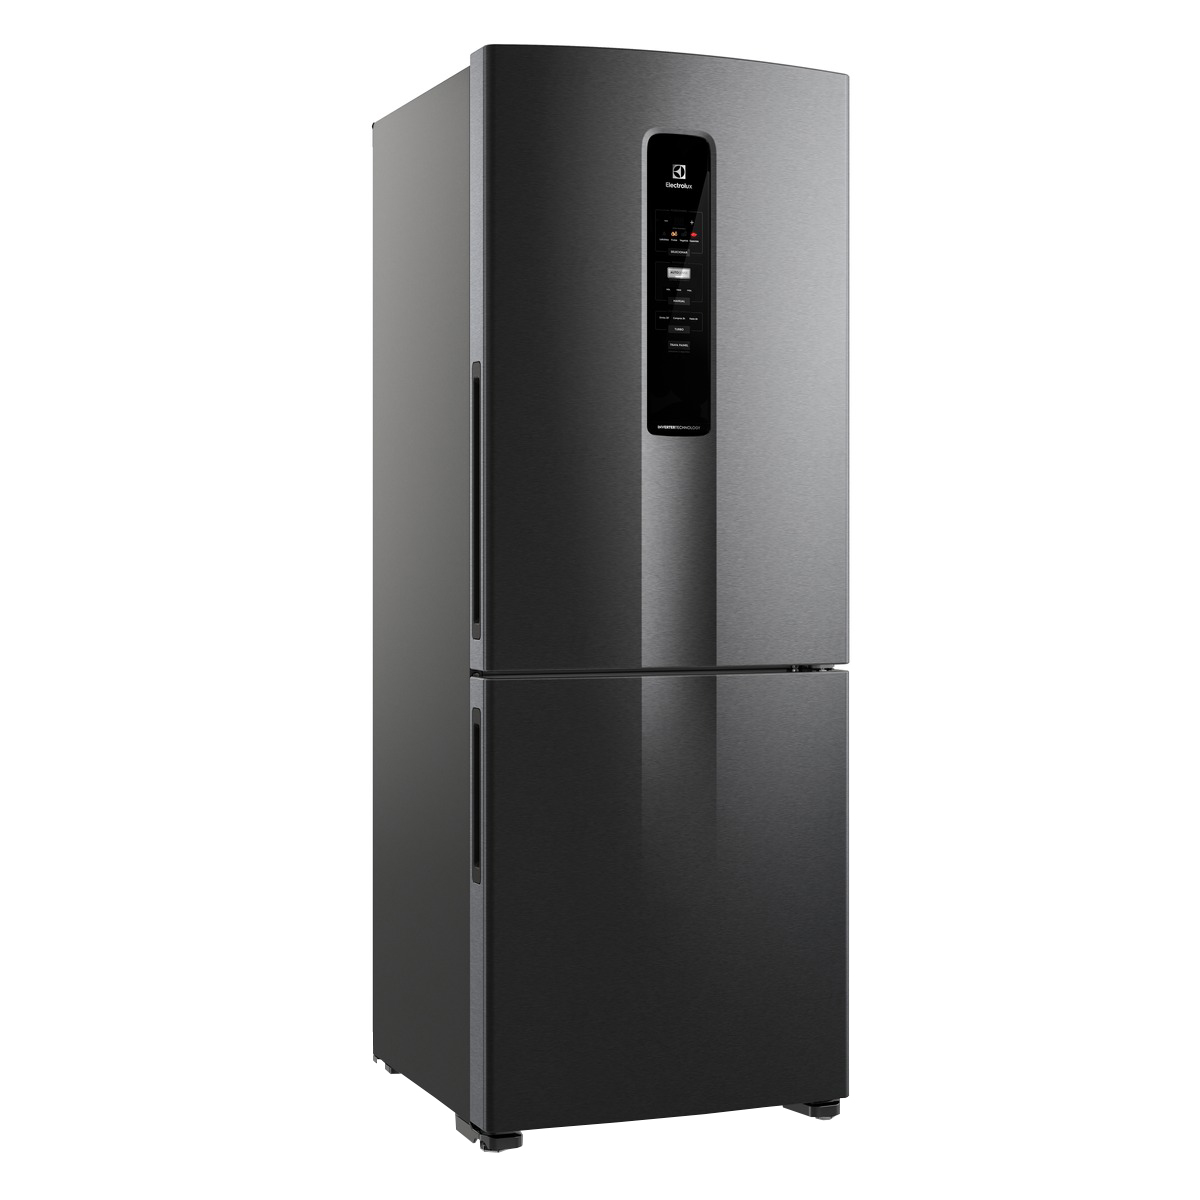 Geladeira Refrigerador Electrolux Bottom Freezer 490L Frost Free Inverter Ib7b - Preto - 220 Volts